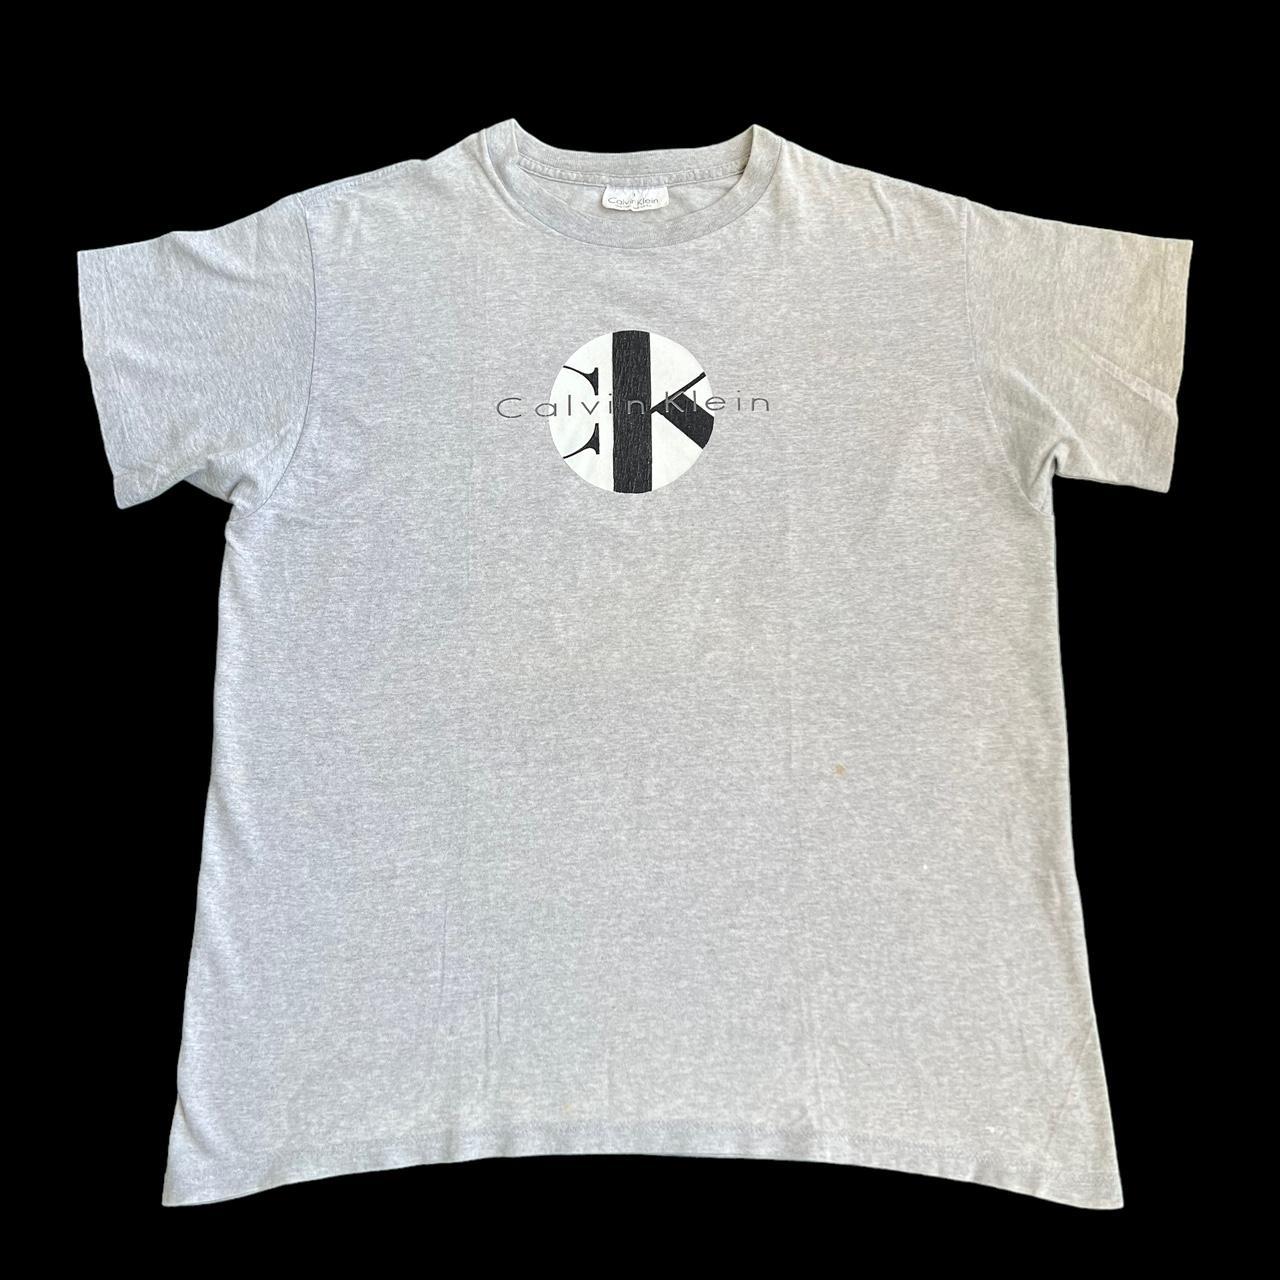 Vintage Calvin Klein CK crew t shirt USA made Large... - Depop